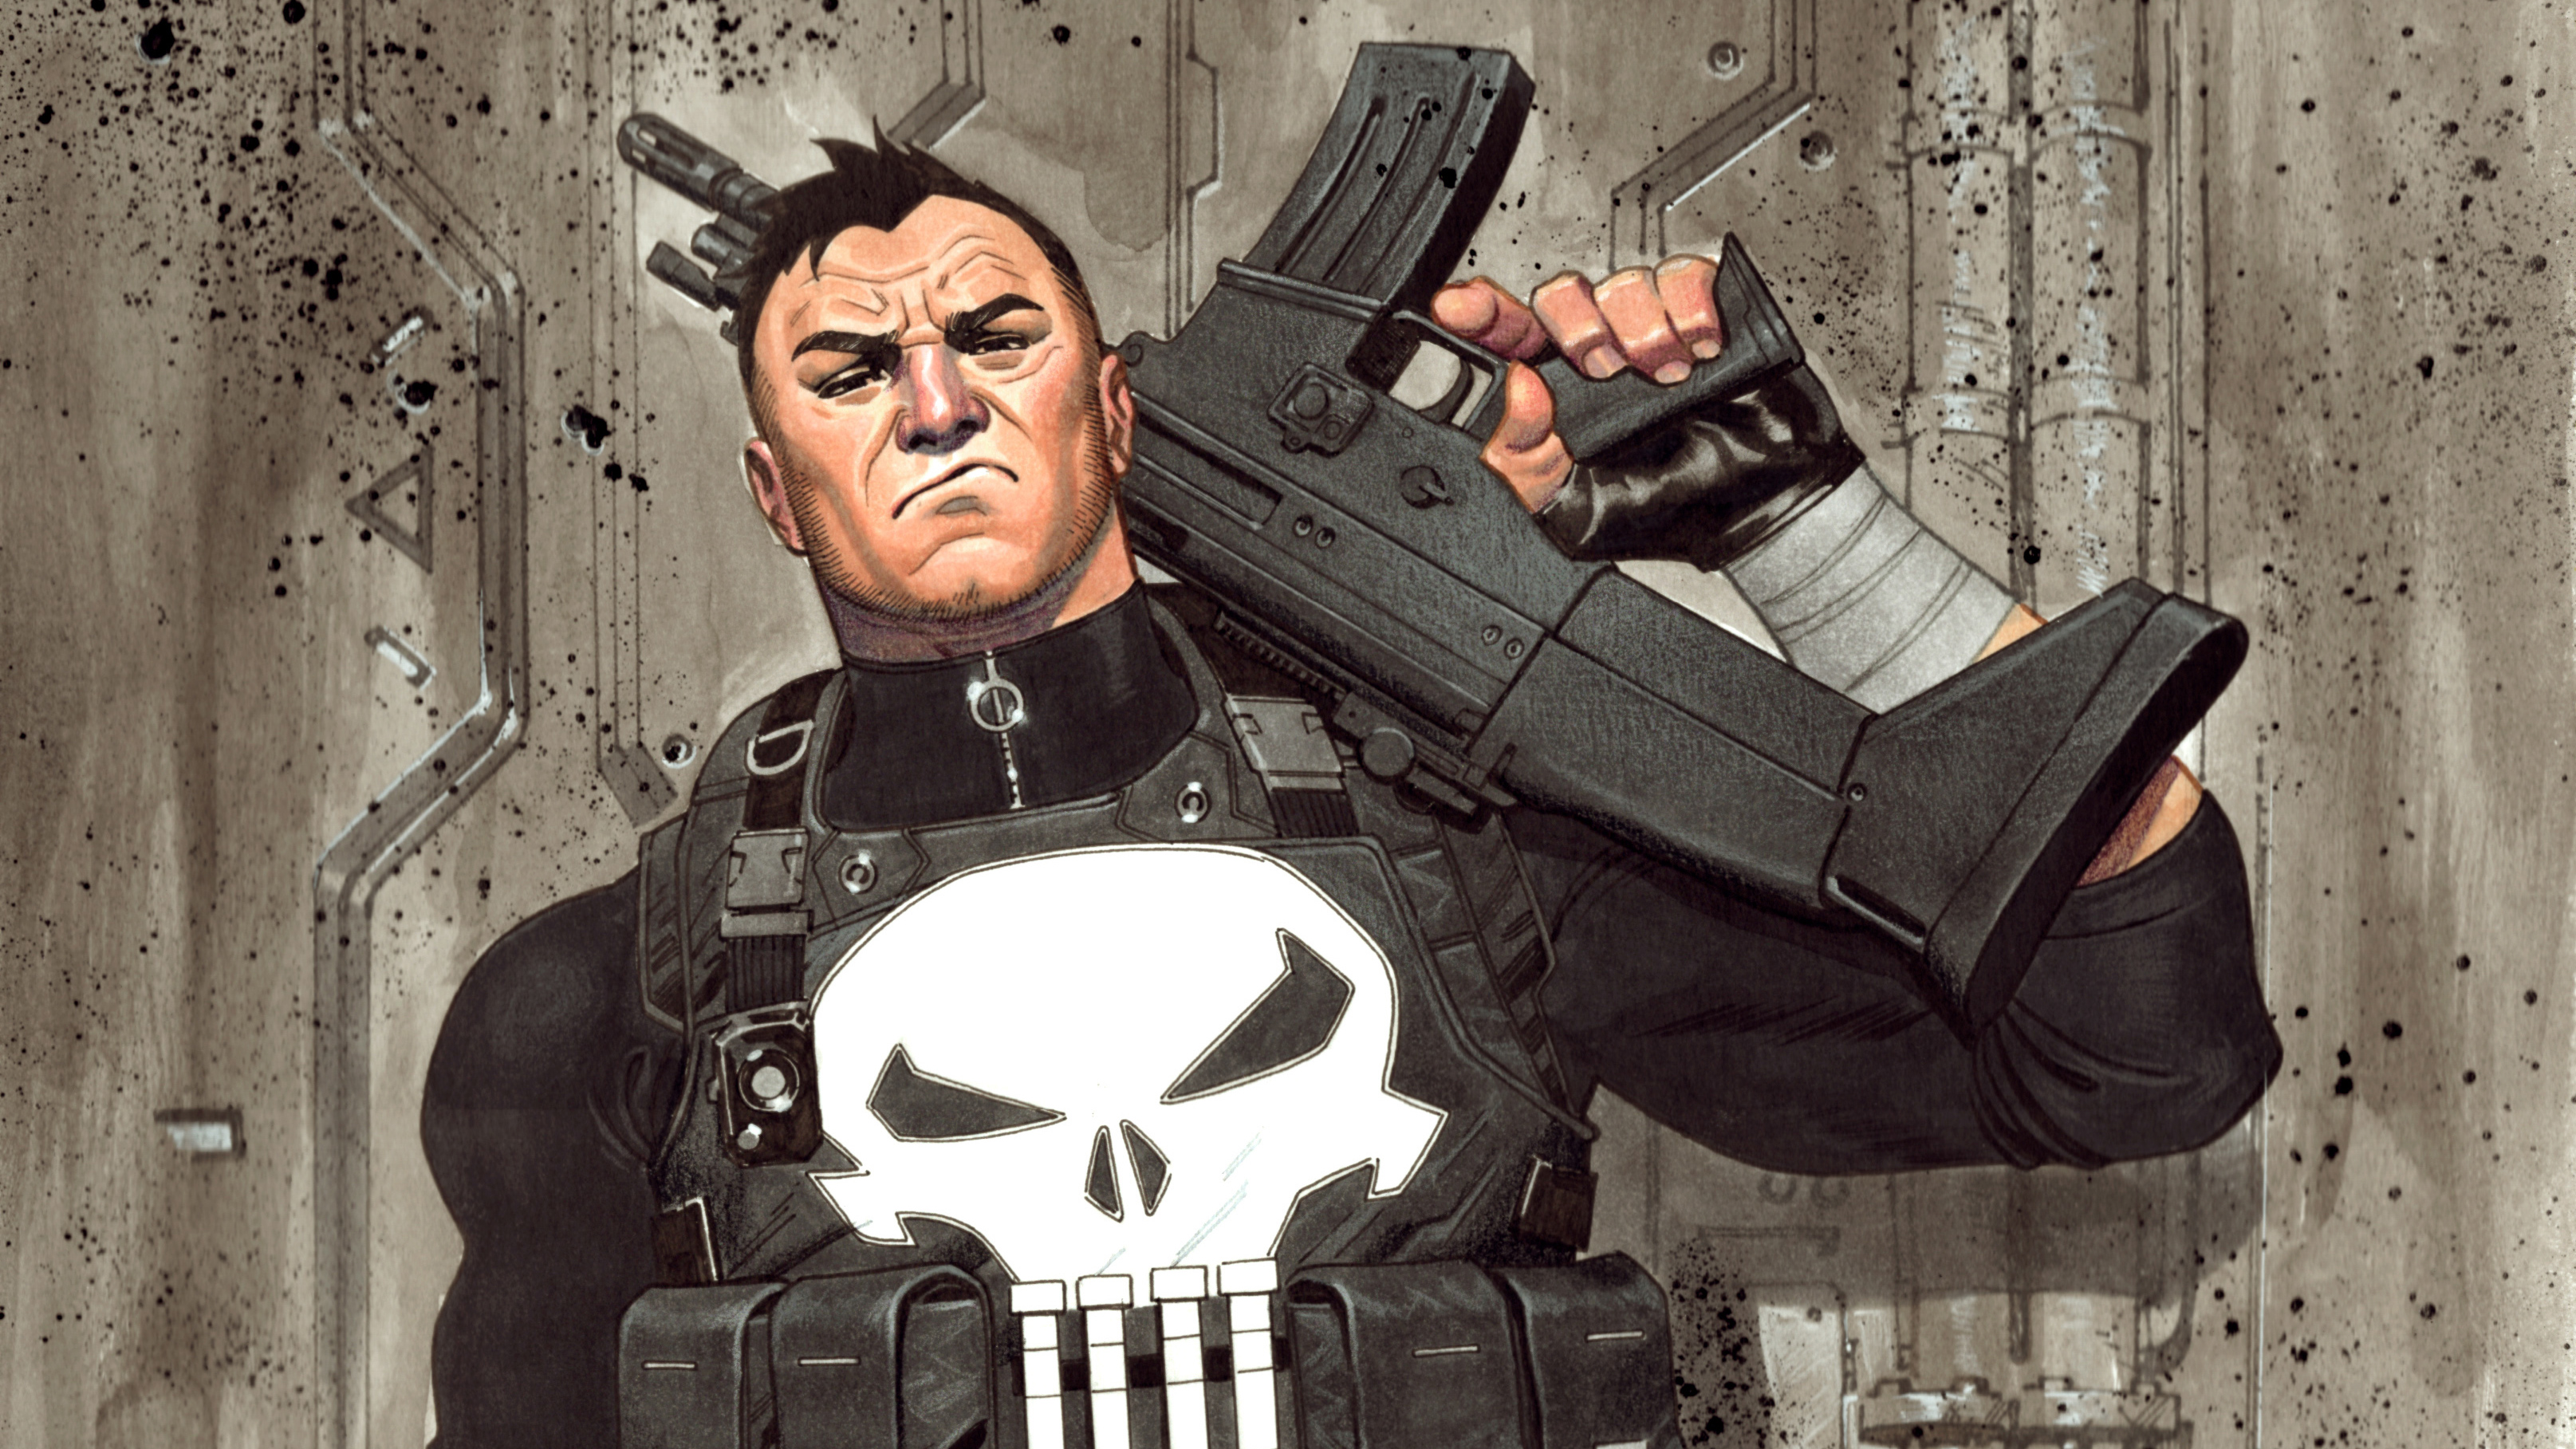 Punisher 4k Art, HD Superheroes, 4k Wallpapers, Image, Backgrounds, Photos ...